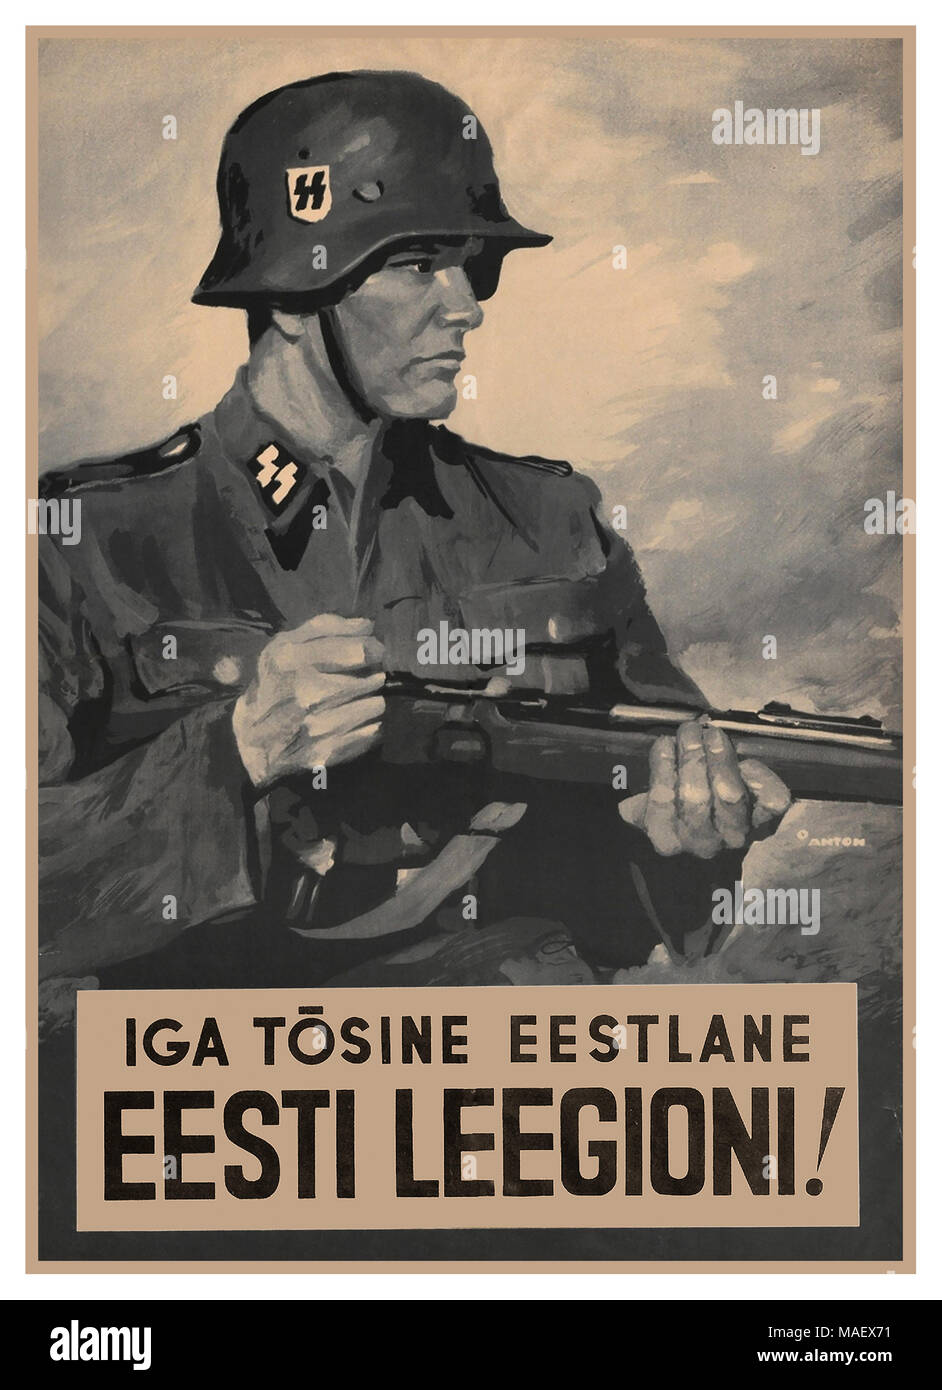 1942 WW2 Nazi Waffen SS Propaganda Recruitment Poster 'Every Serious Estonian to the Estonian Legion' ! Nazi Germany Recruiting Poster Estonia Baltic States Eastern Europe Stock Photo